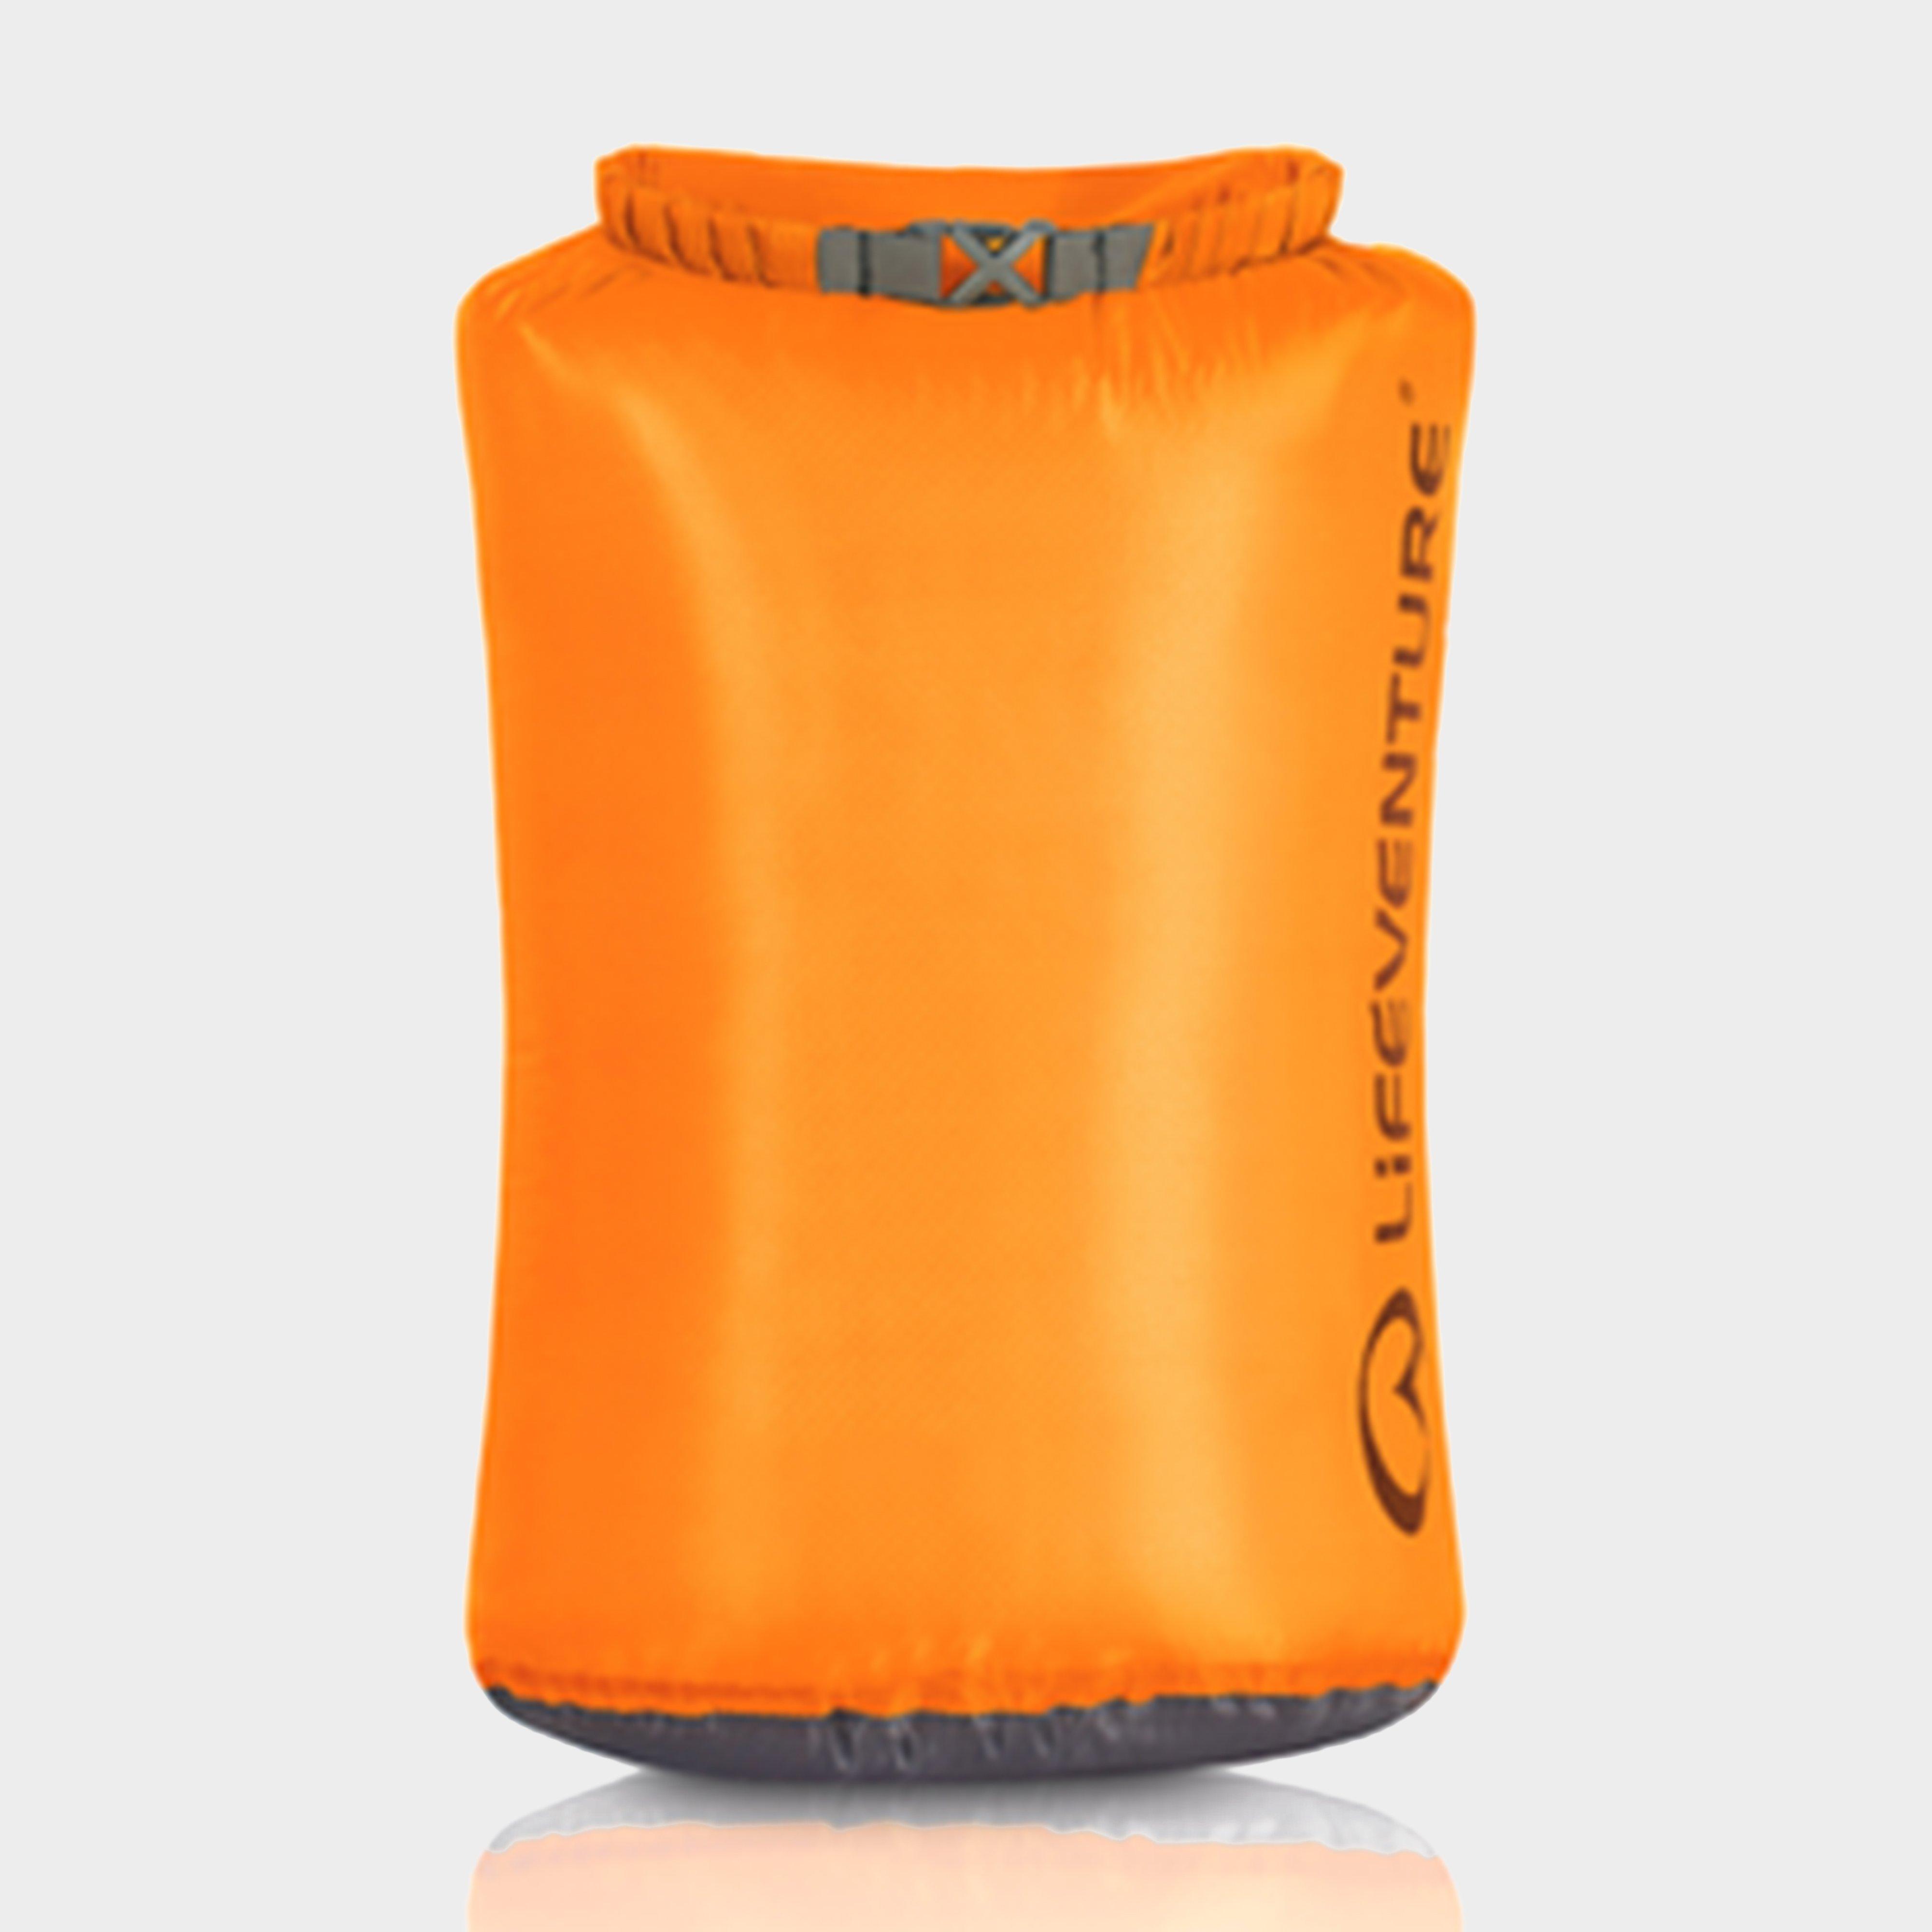 Lifeventure Ultralight 15l Dry Bag - Orange/15l  Orange/15l